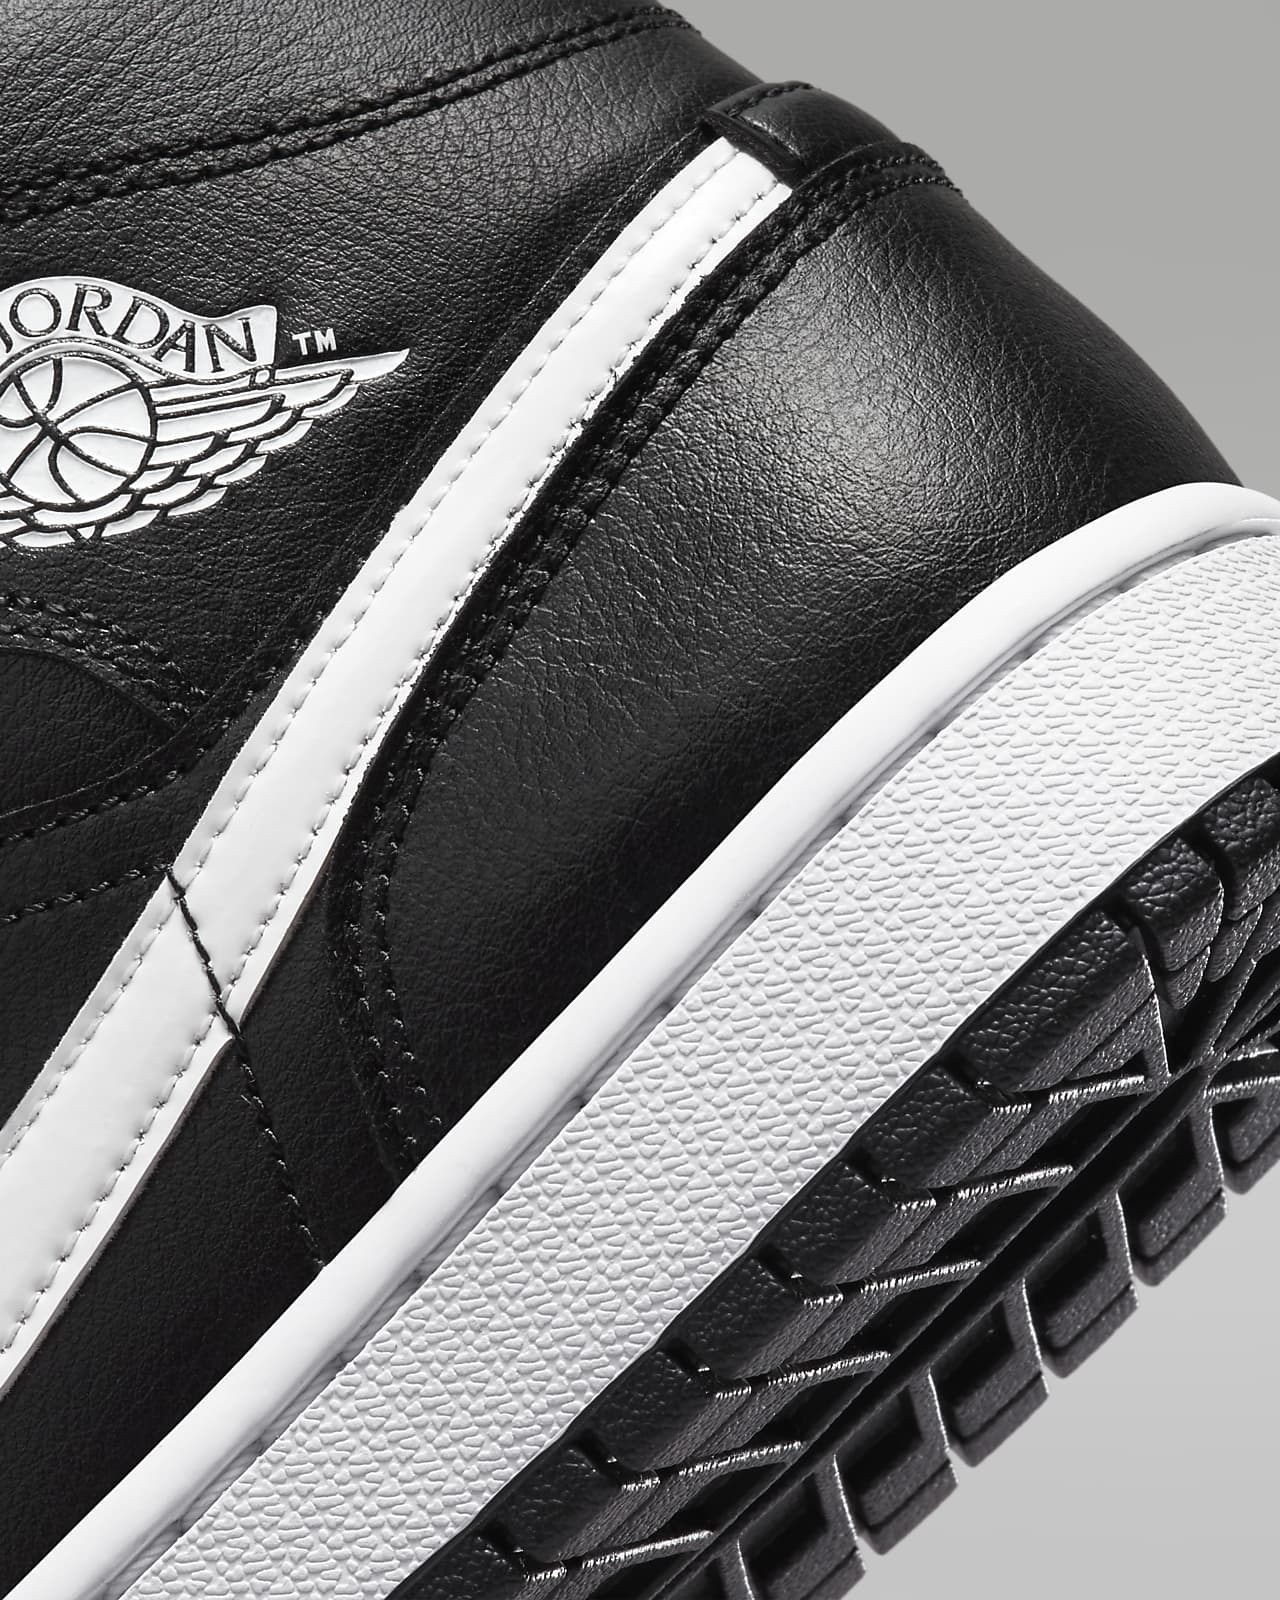 Nike Air Jordan 1 Mid sneakers in gray and white